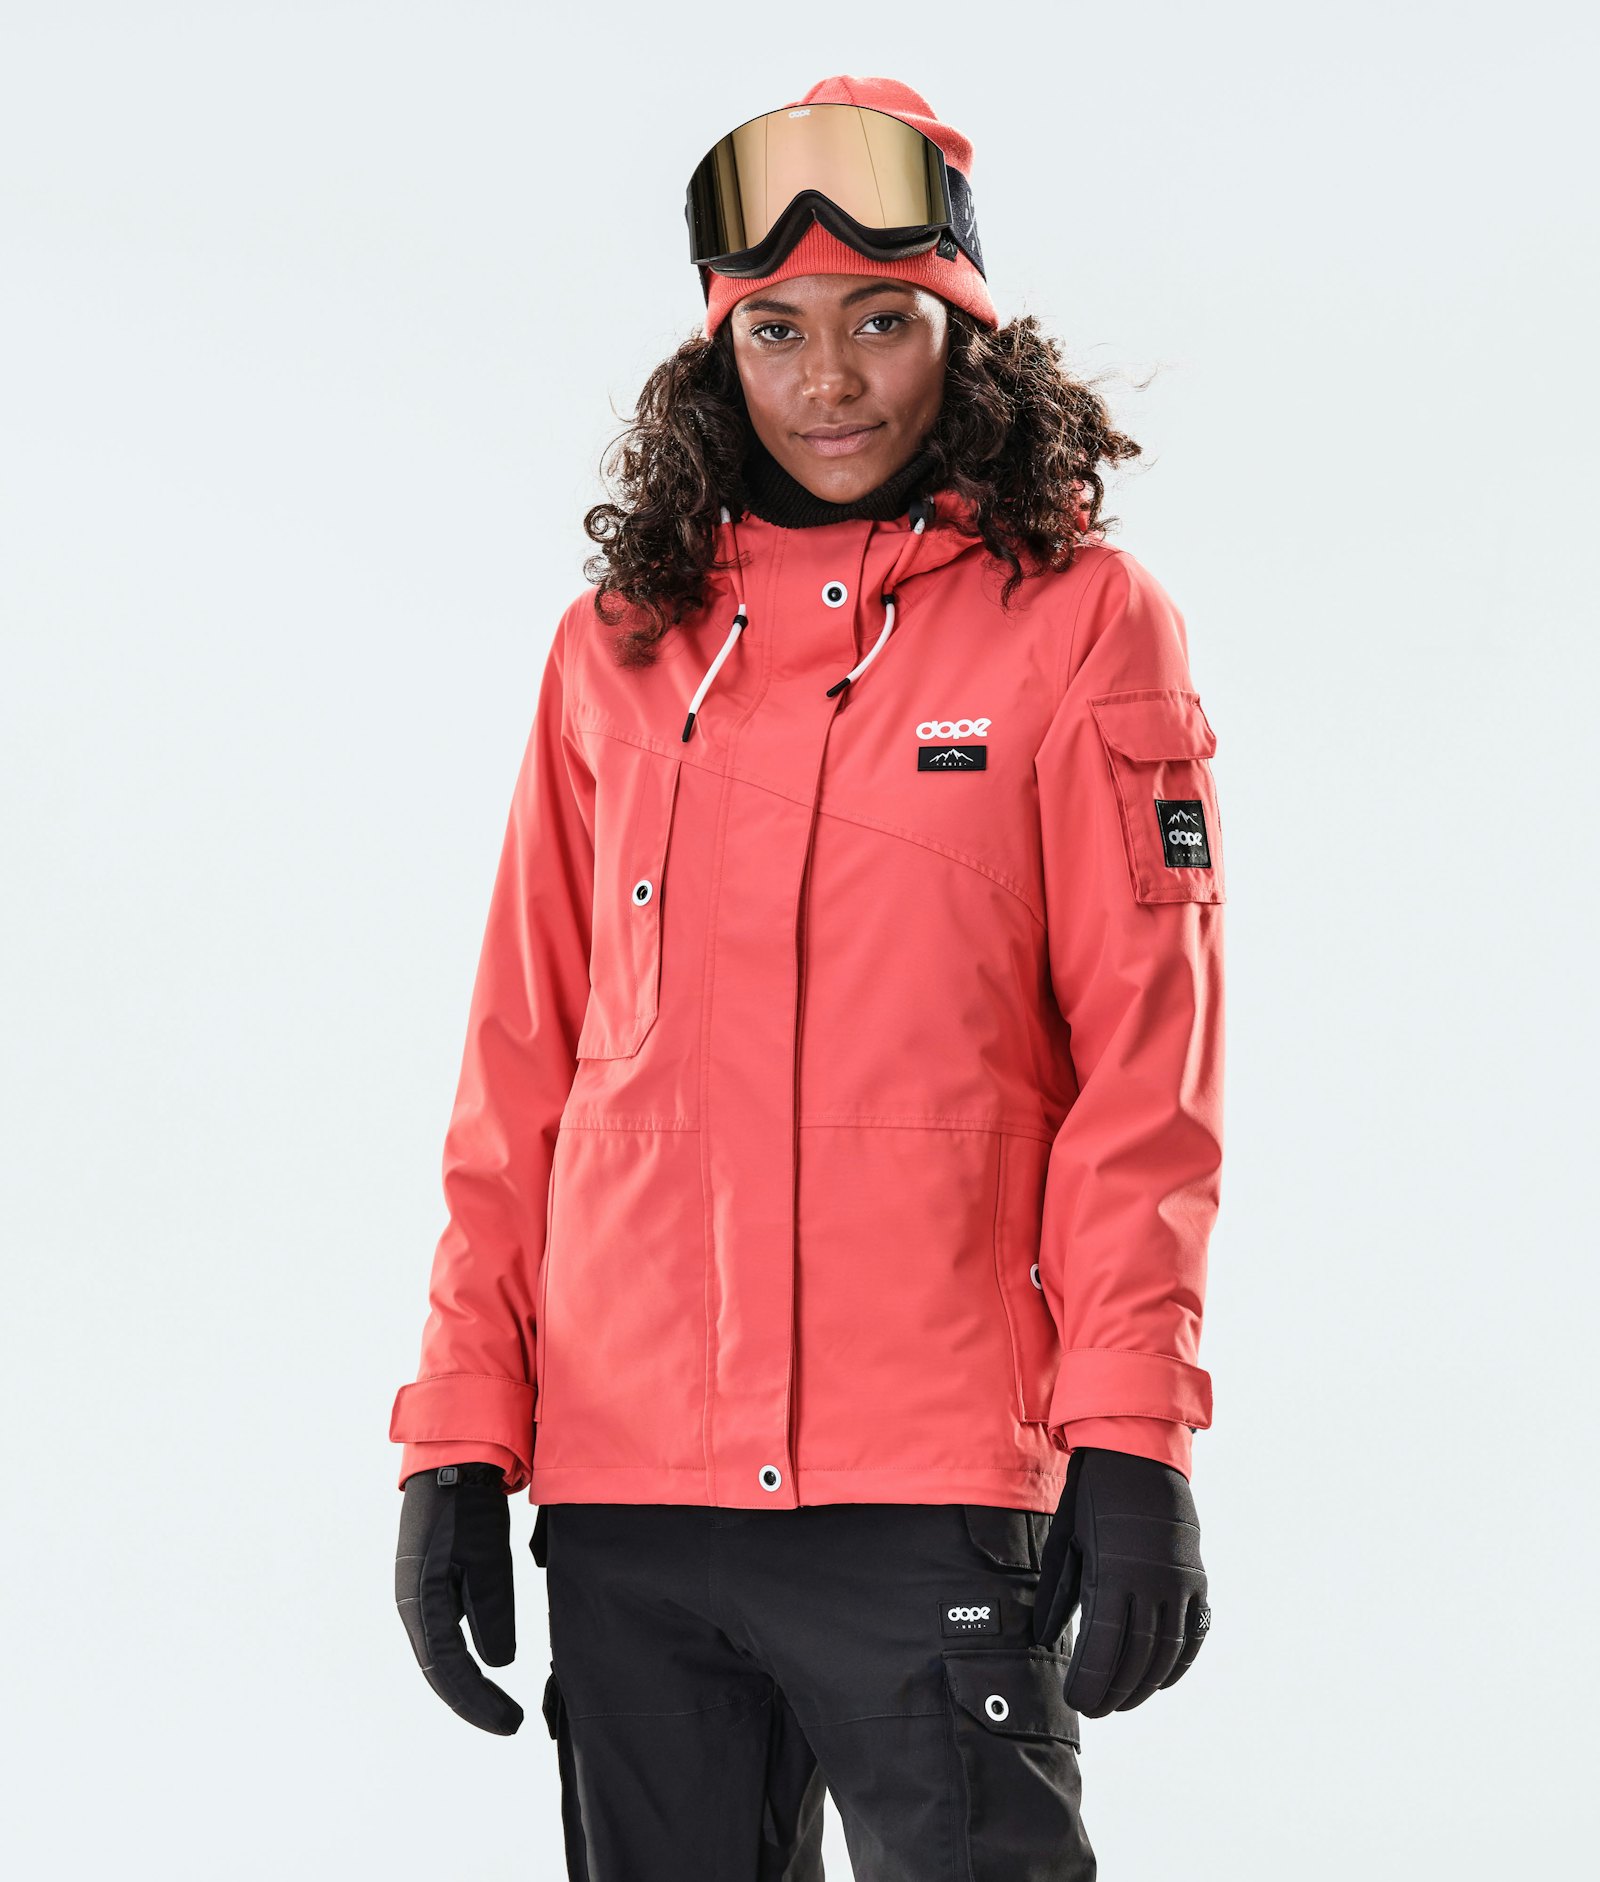 Adept W 2020 Snowboardjakke Dame Coral